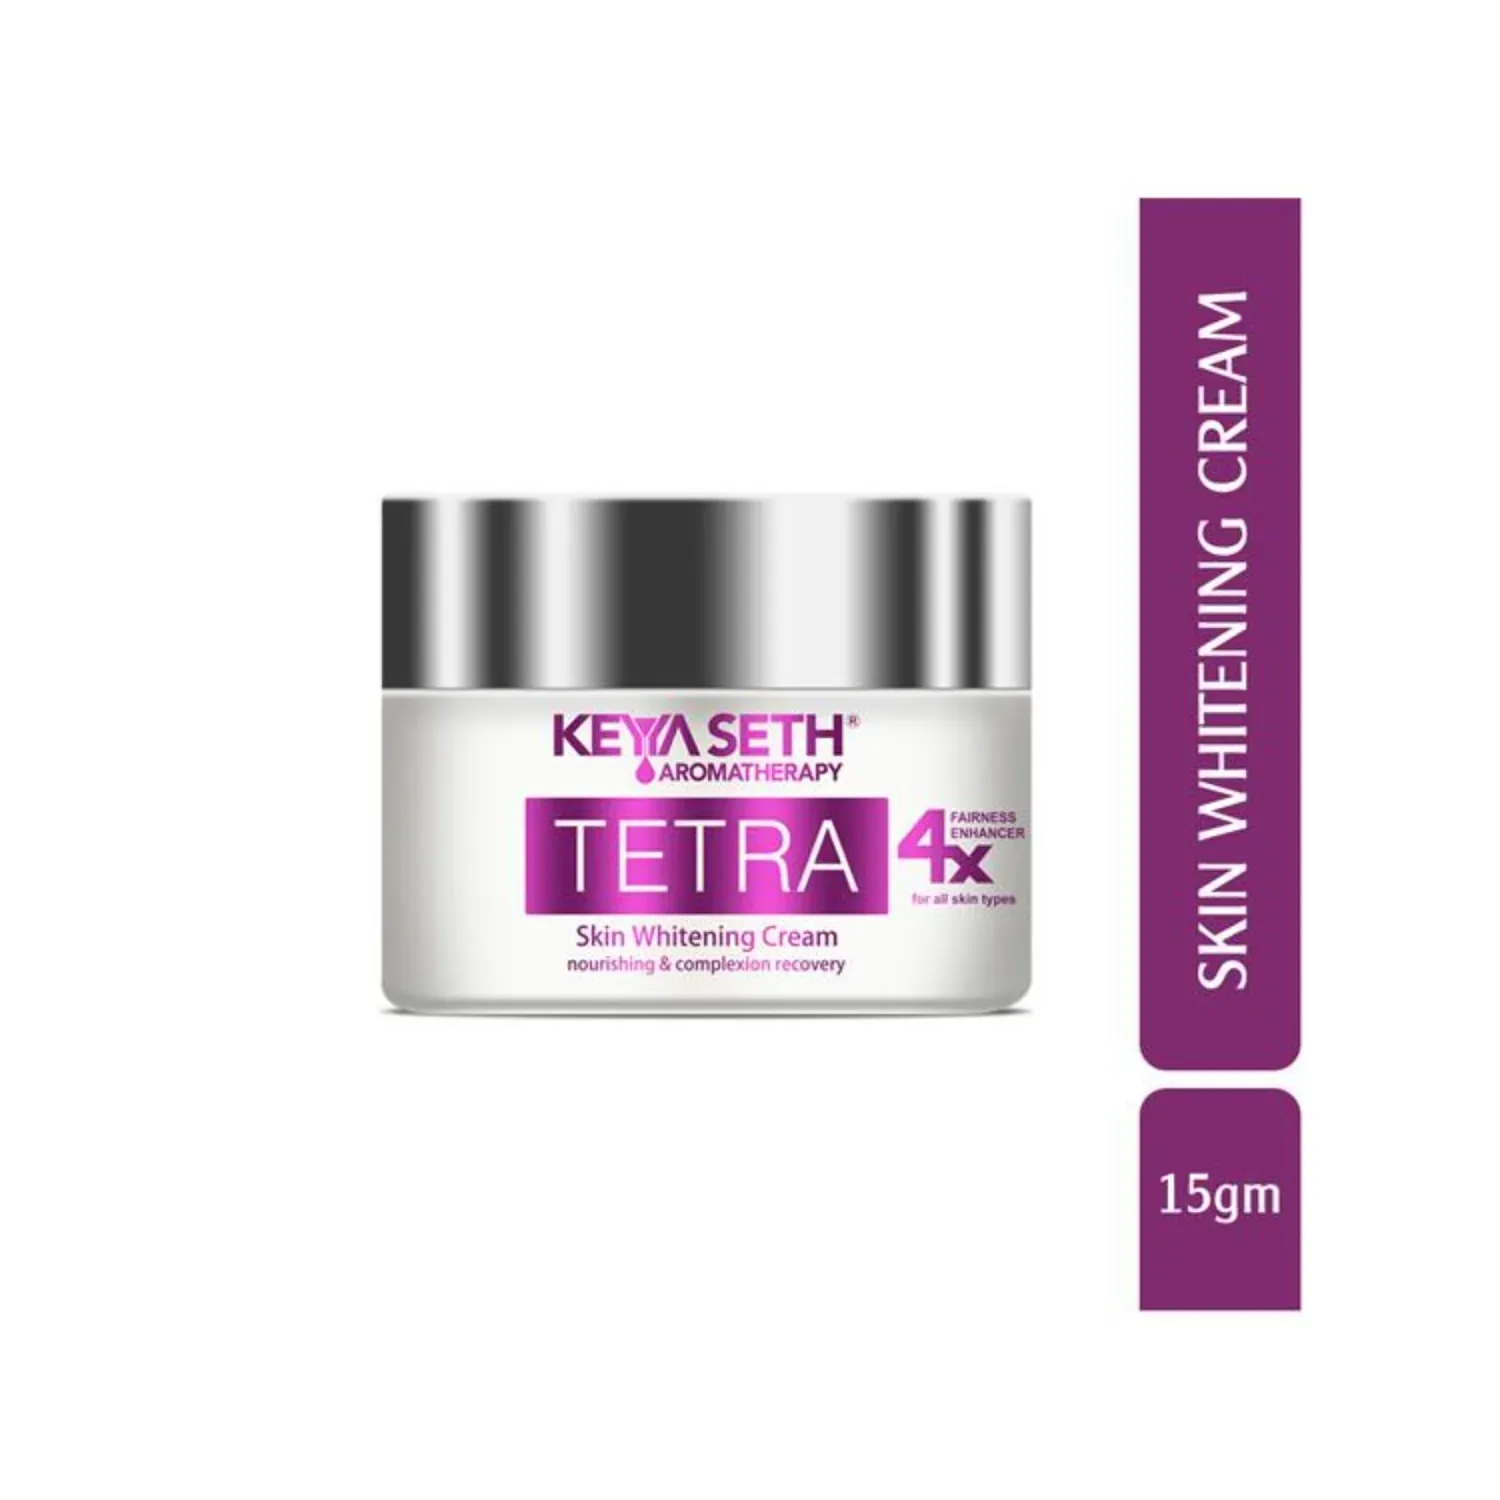 Keya Seth Aromatherapy Tetra Skin Whitening Night Cream (15g)